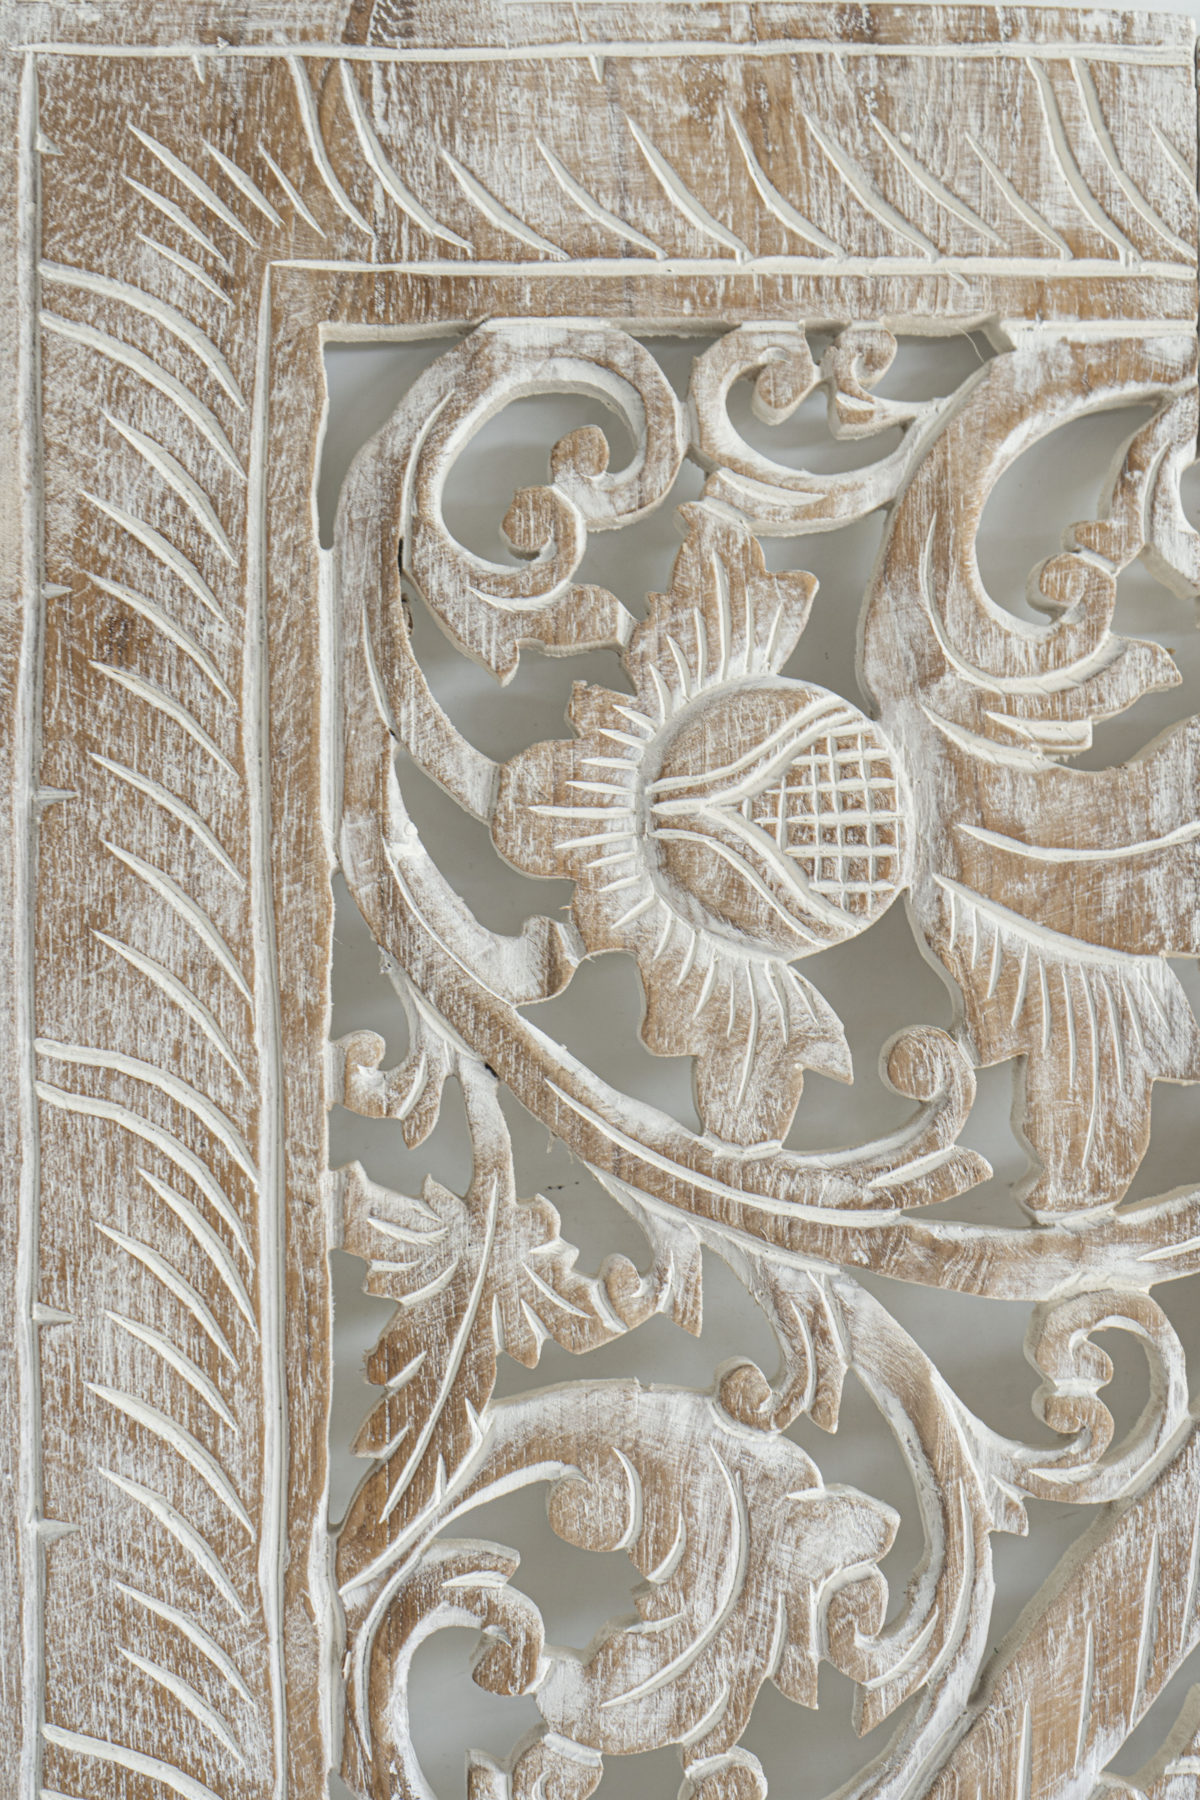 Geometric pattern carved on wood